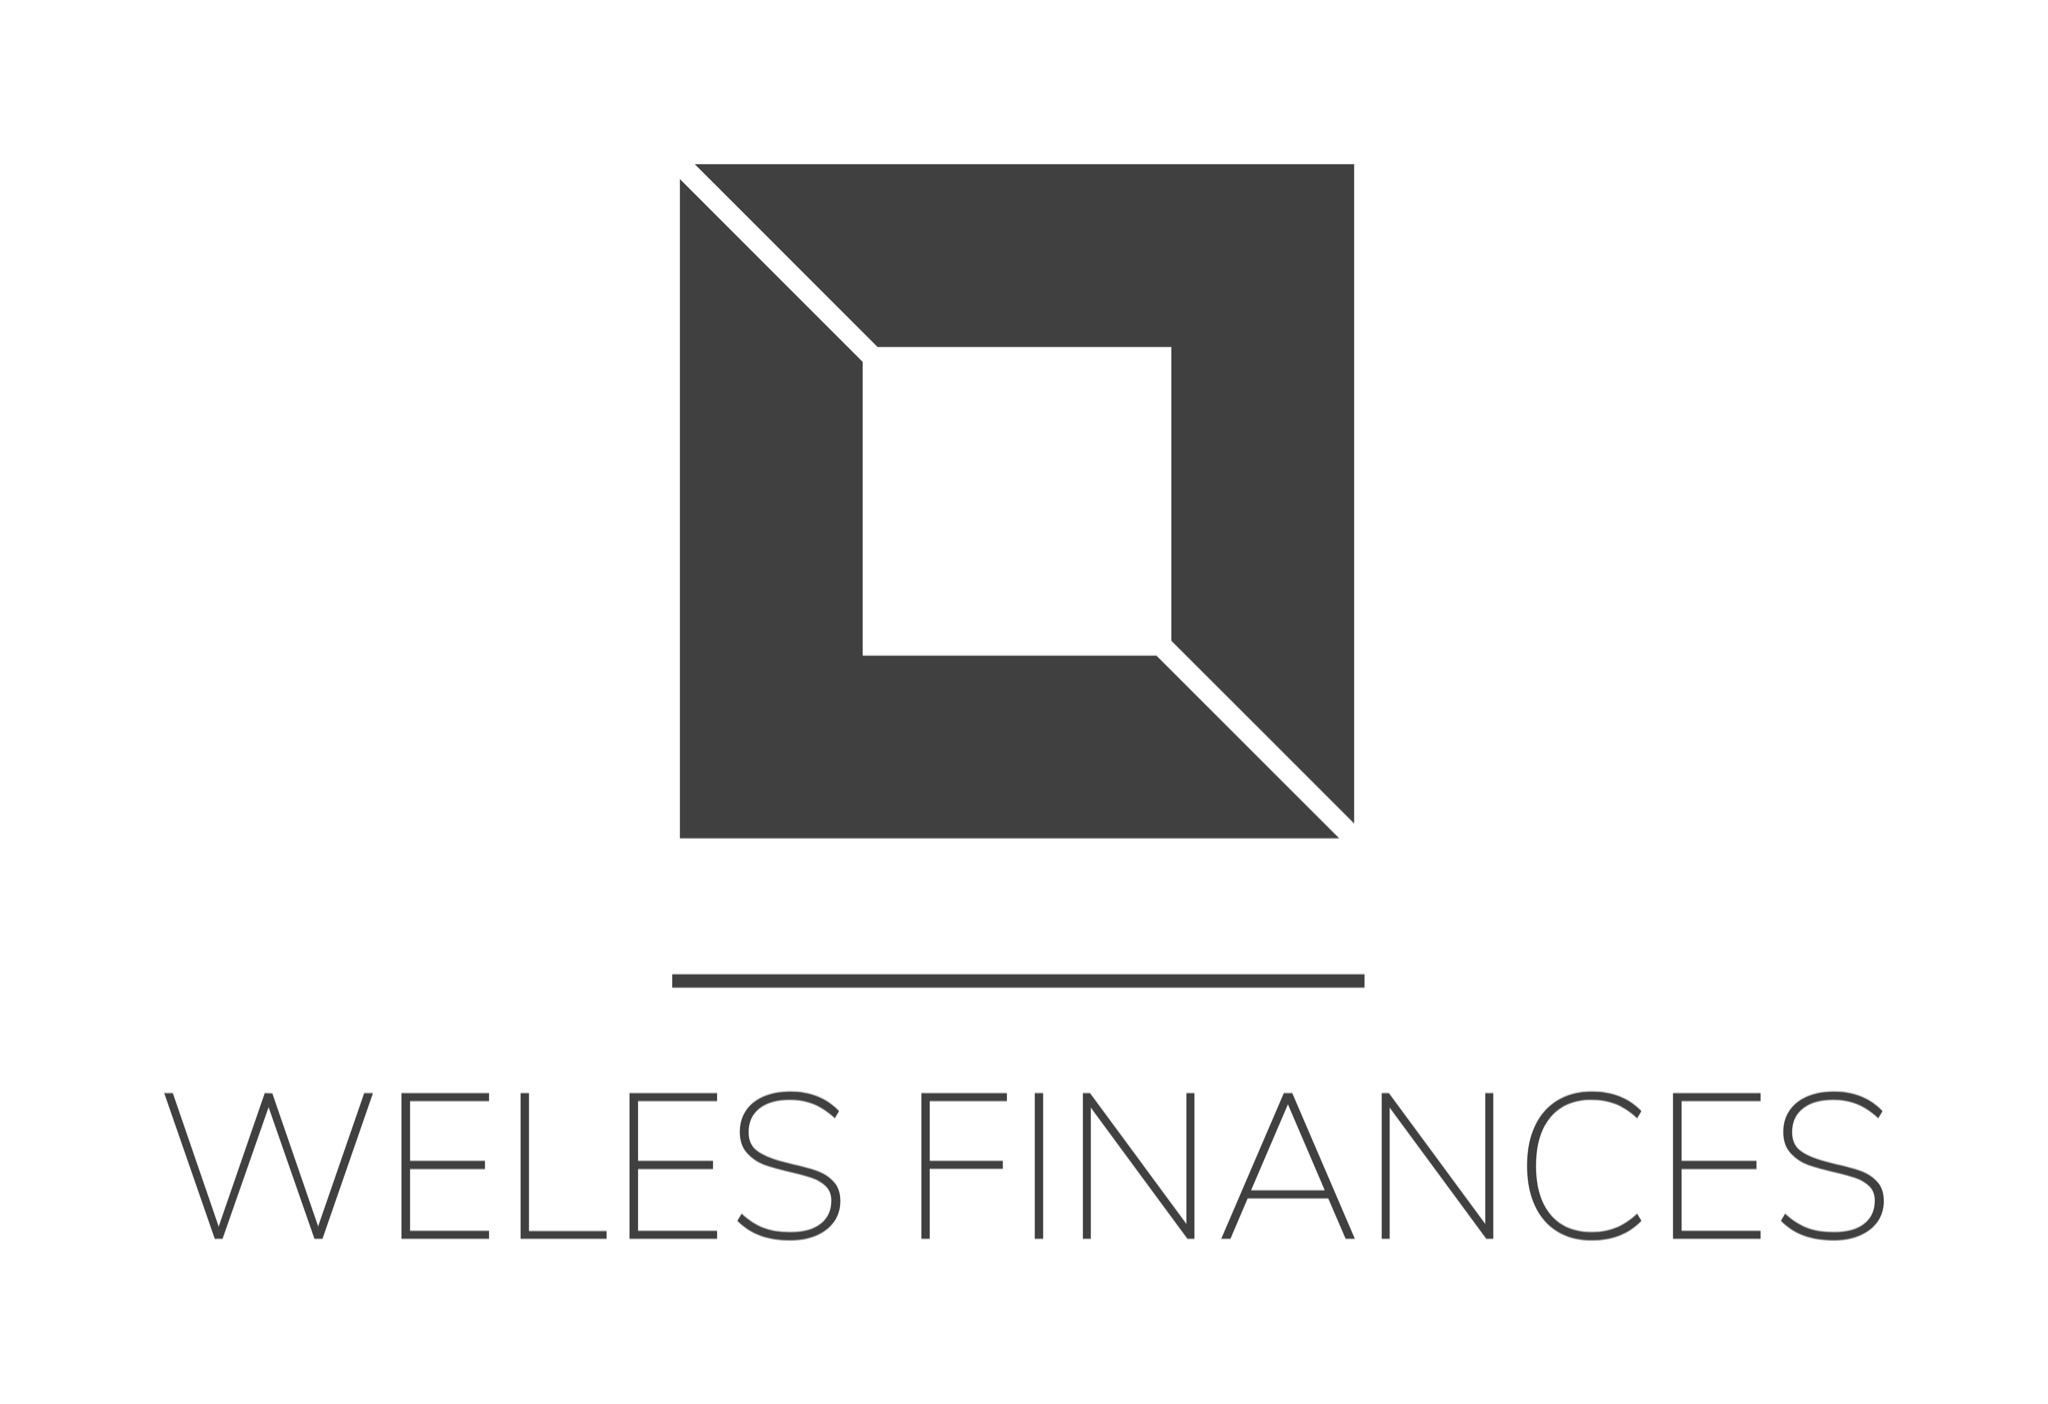 Weles Finance